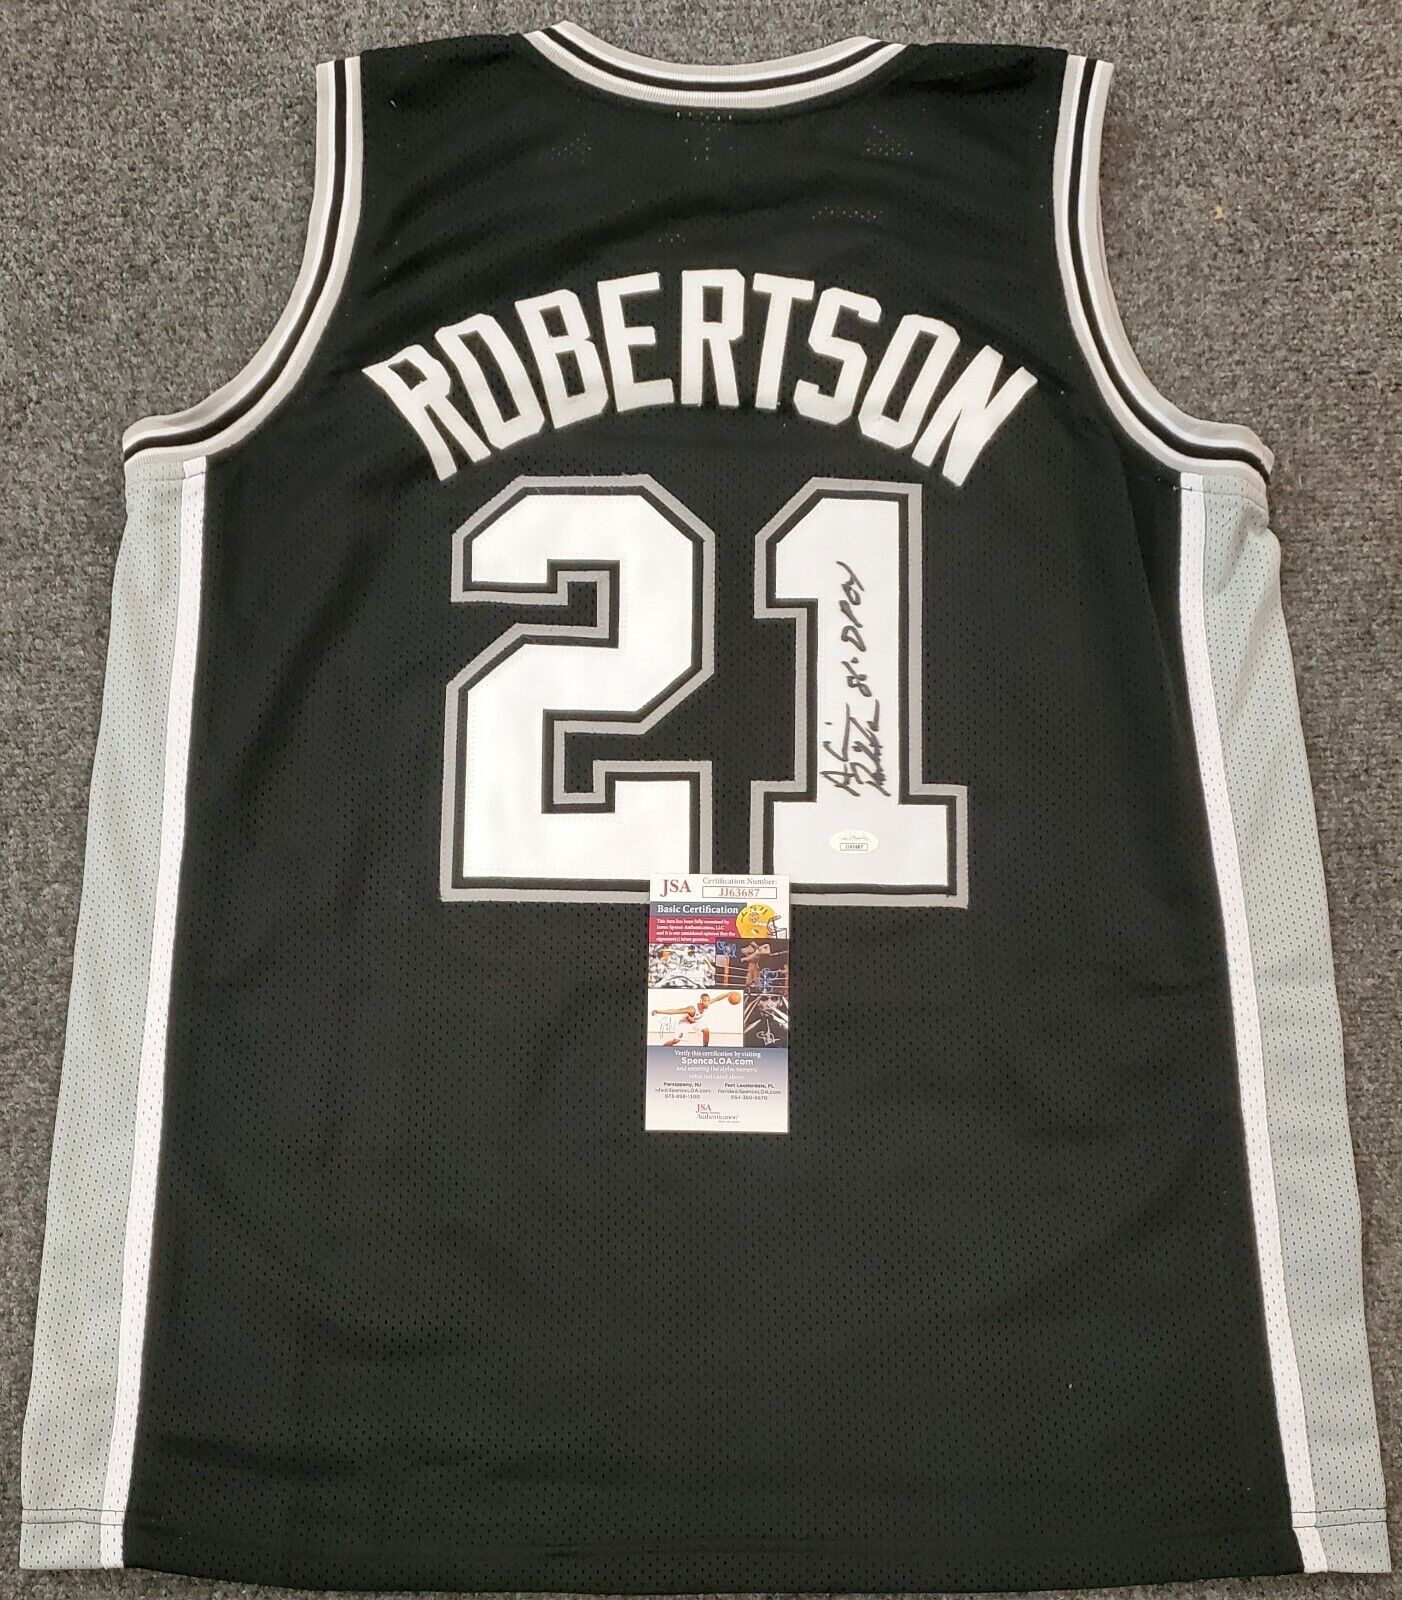 Custom San Antonio Spurs Jerseys, Spurs Custom Basketball Jerseys